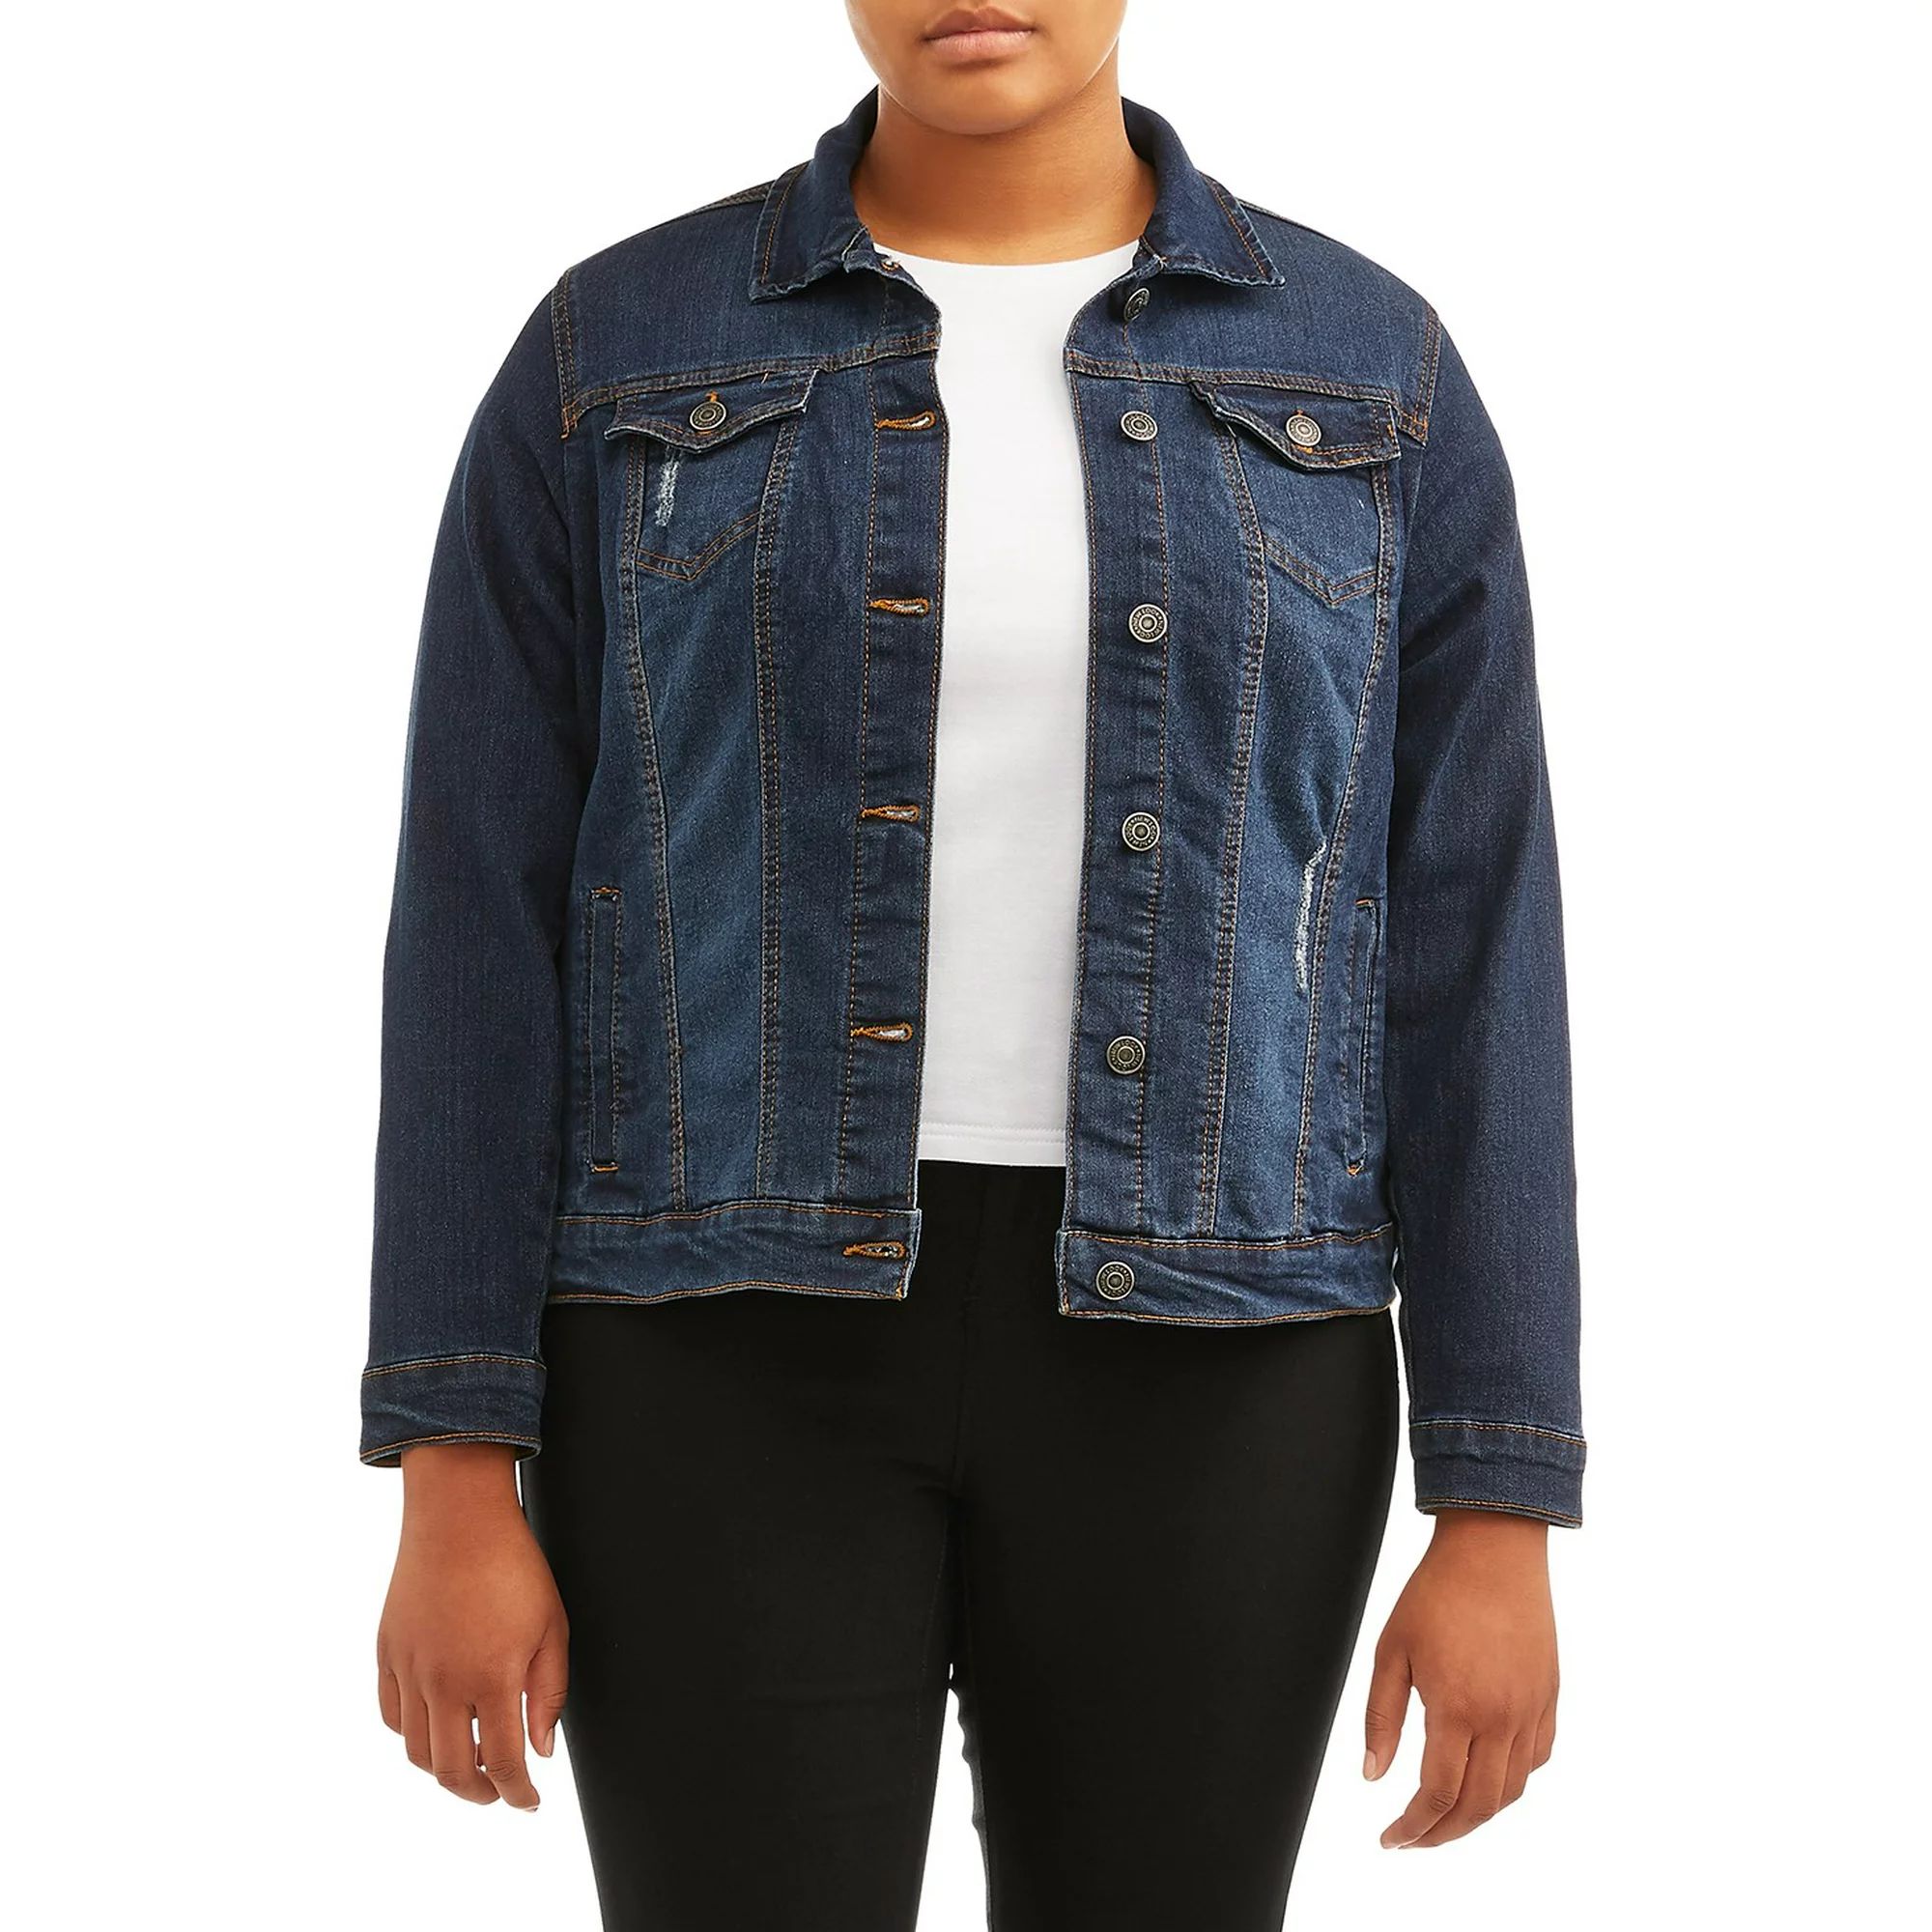 New Look - New Look Juniors' Plus Size Distressed Denim Jacket - Walmart.com | Walmart (US)